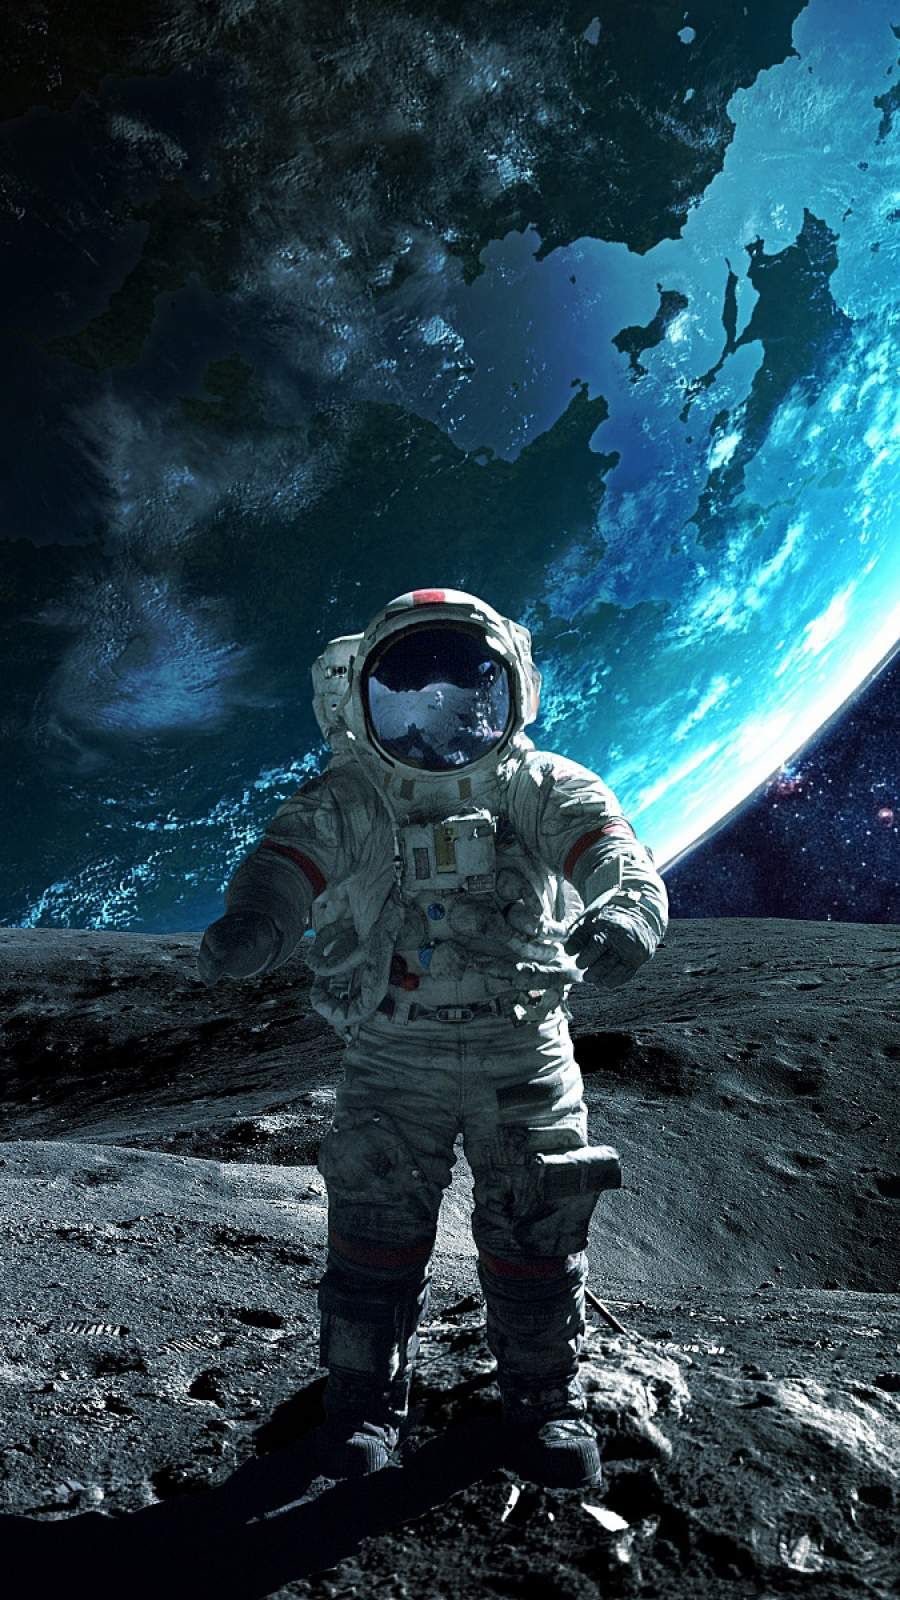 Moon astronaut iphone wallpaper astronaut wallpaper space artwork iphone wallpaper astronaut